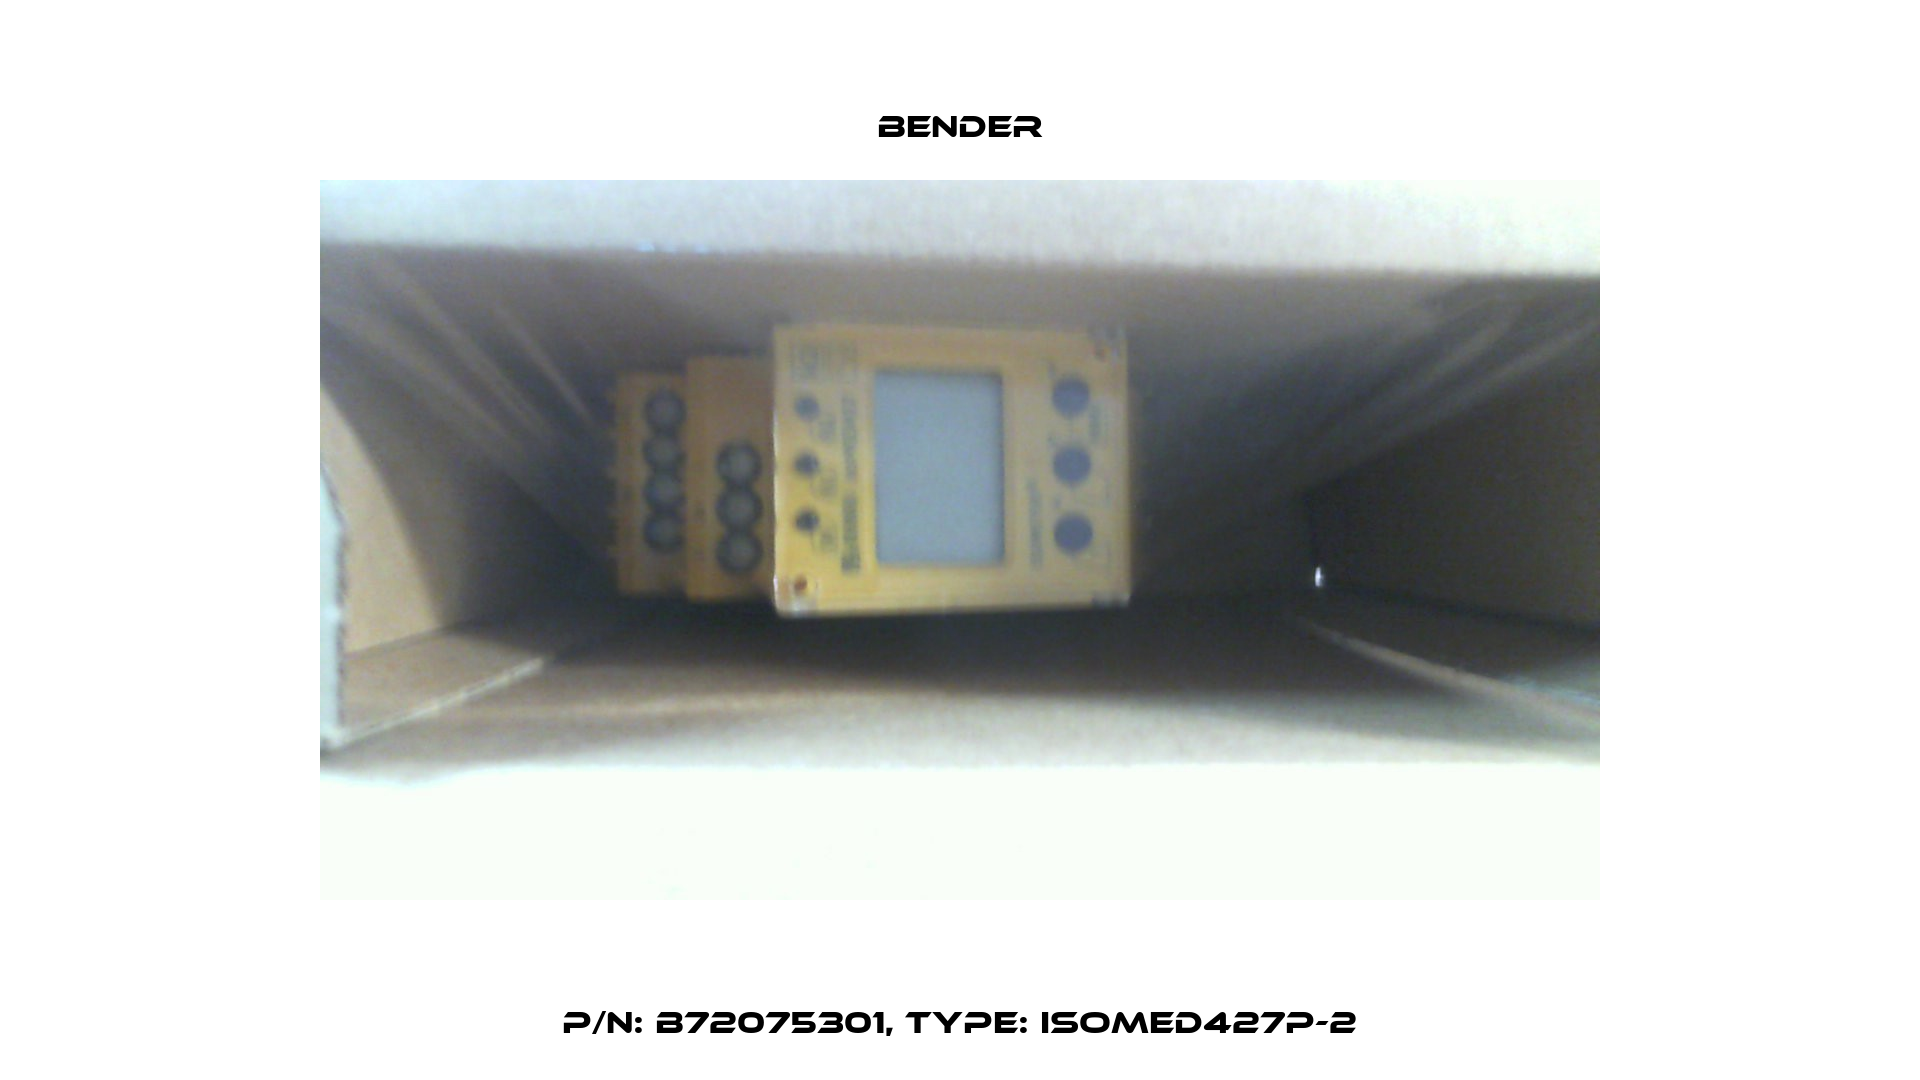 p/n: B72075301, Type: isoMED427P-2 Bender